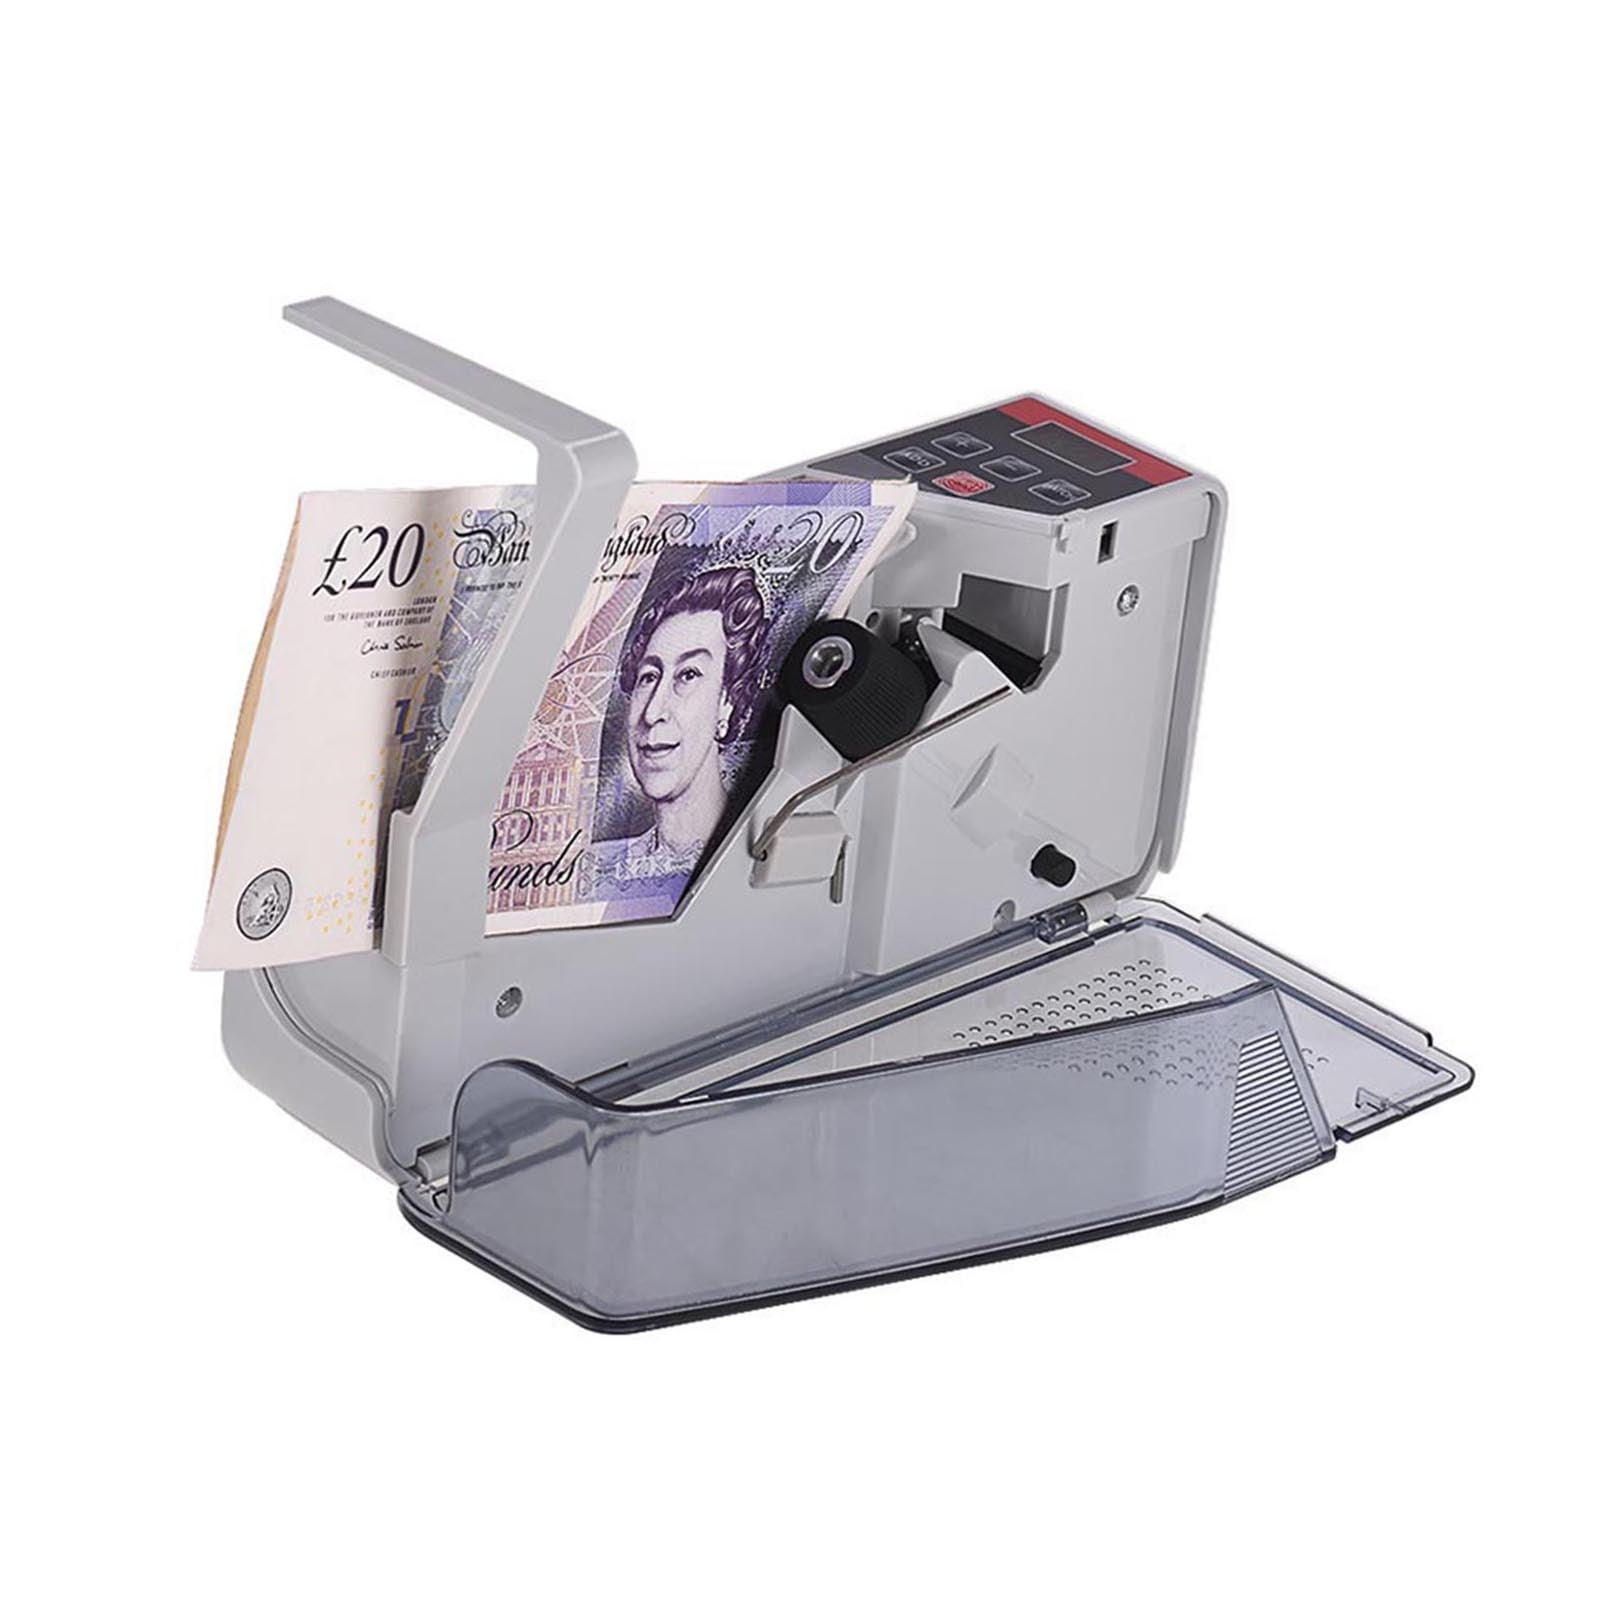 Portable Handy Bill Cash Money Count Machine Mini Banknote Counter V40 for sale online 